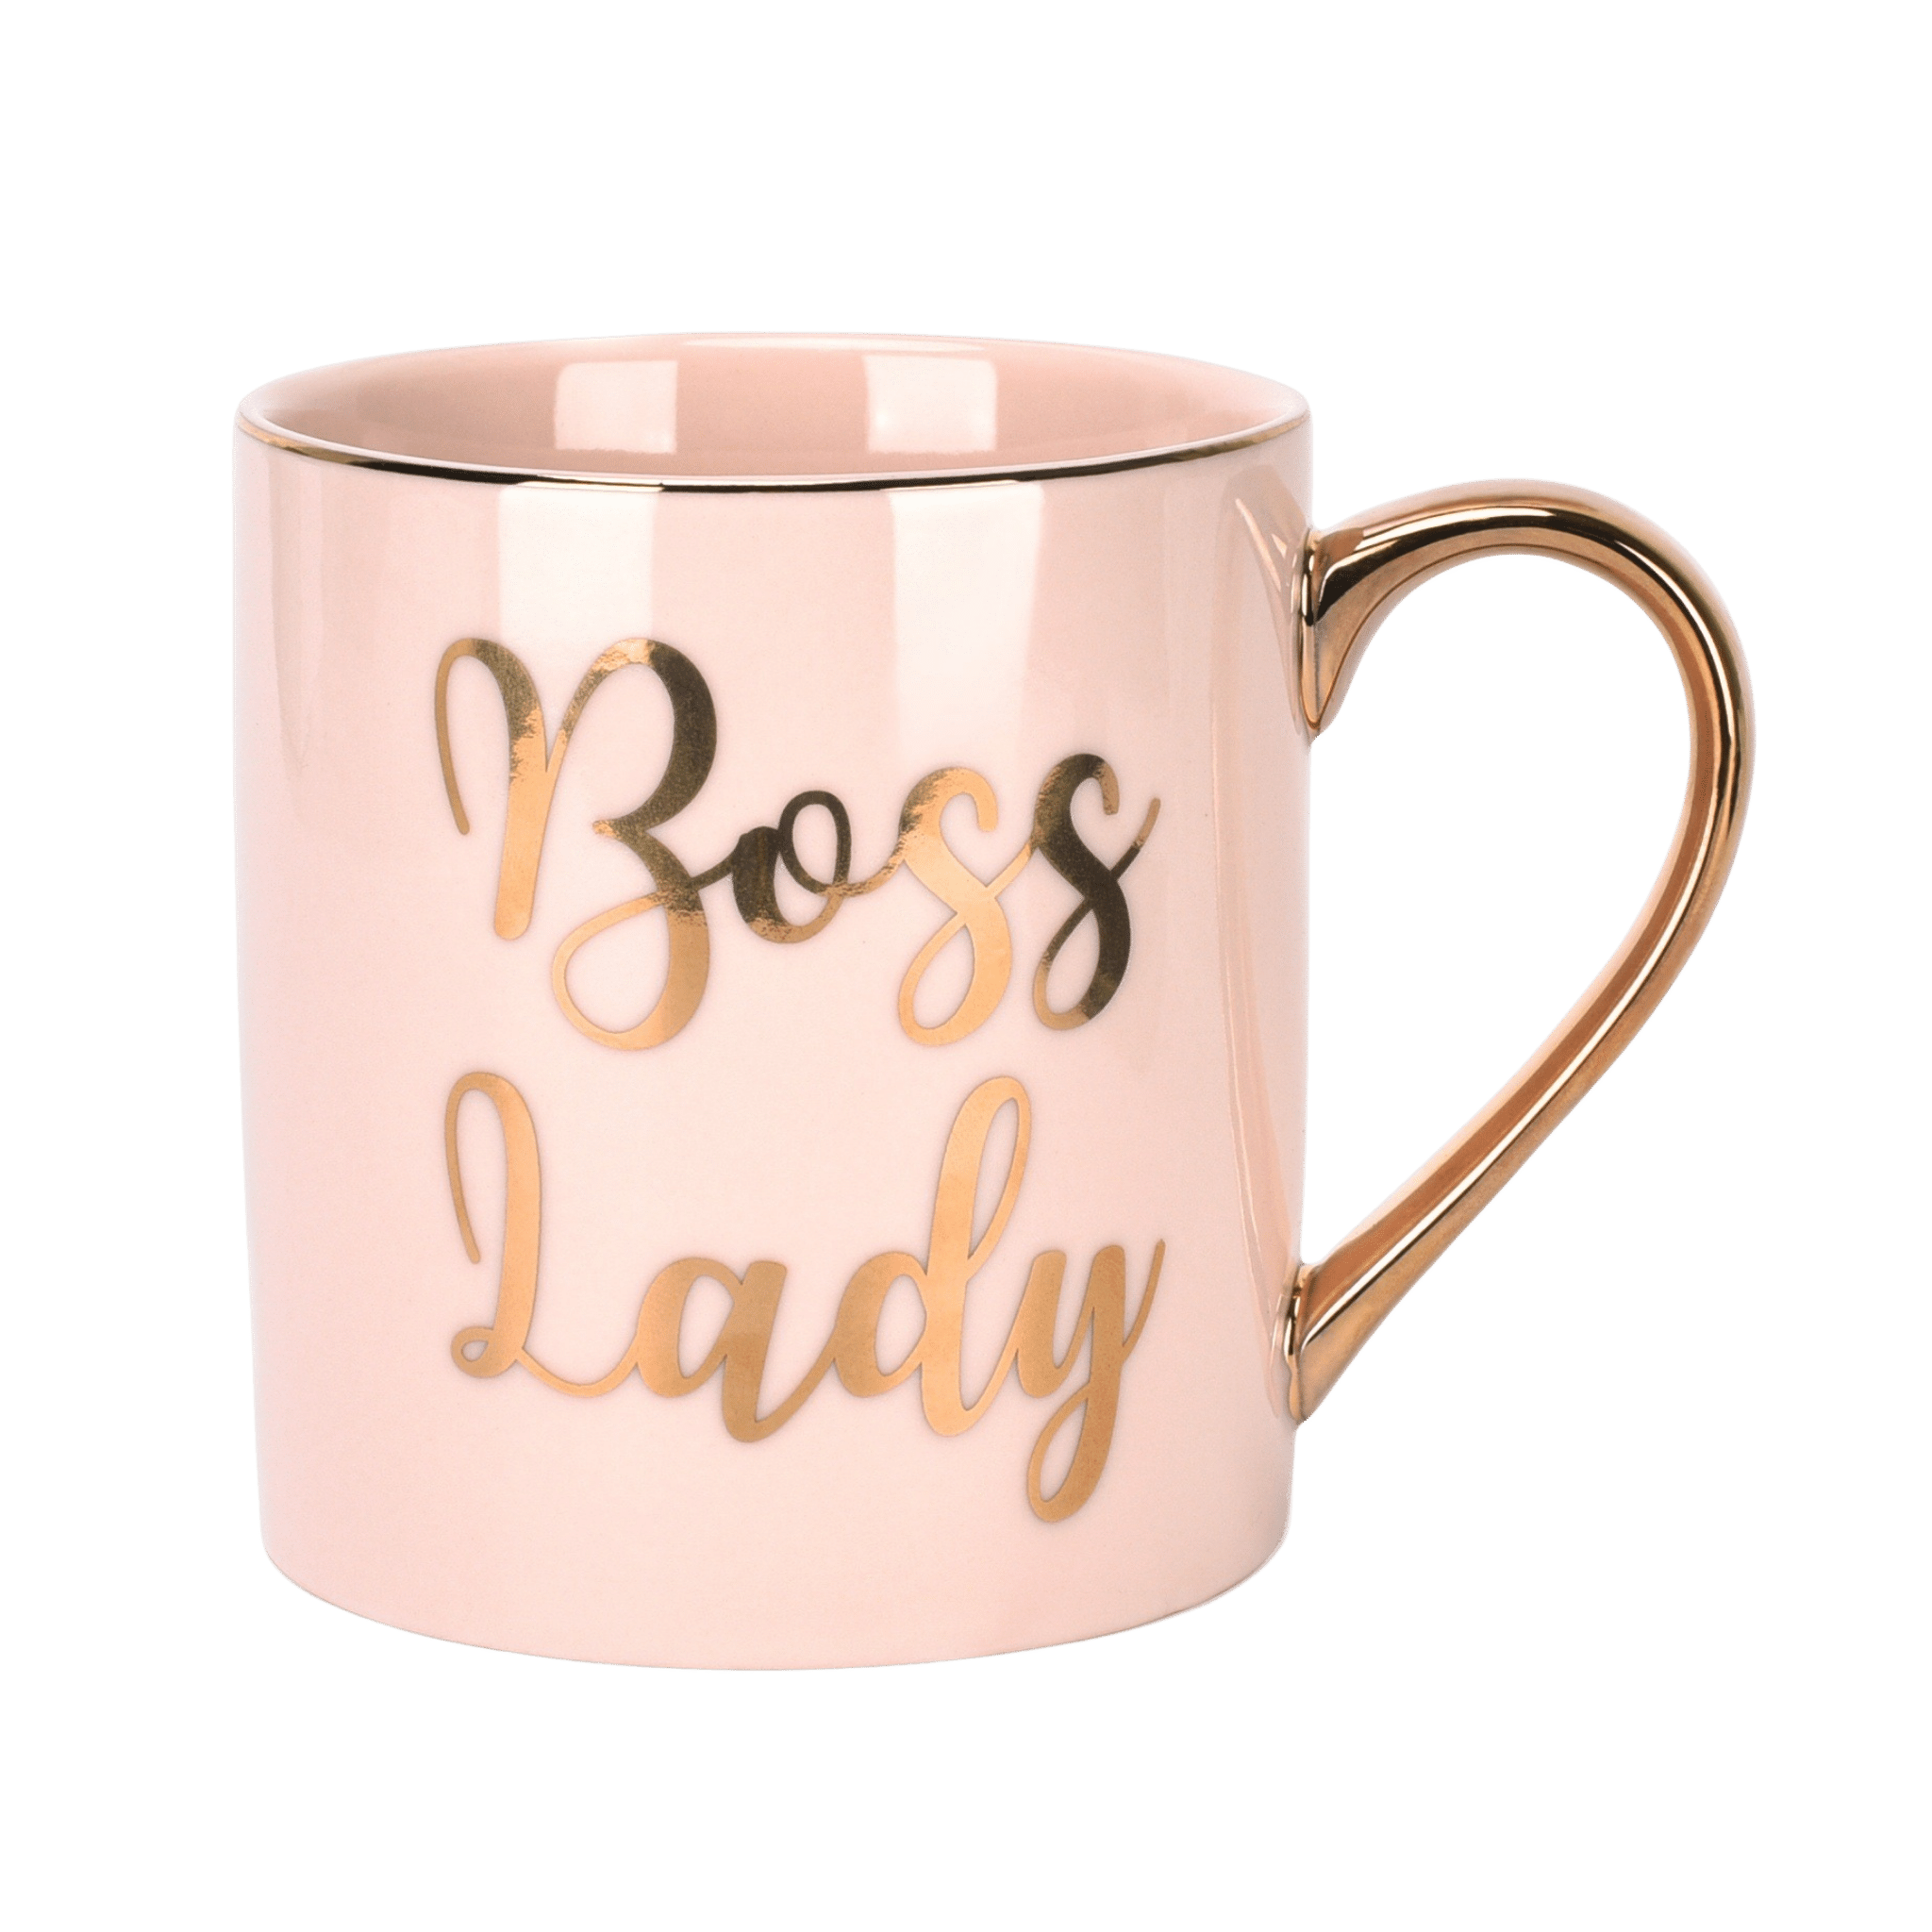 Boss Lady - Tasse Schwarz Gold - Tasse Rosa Gold